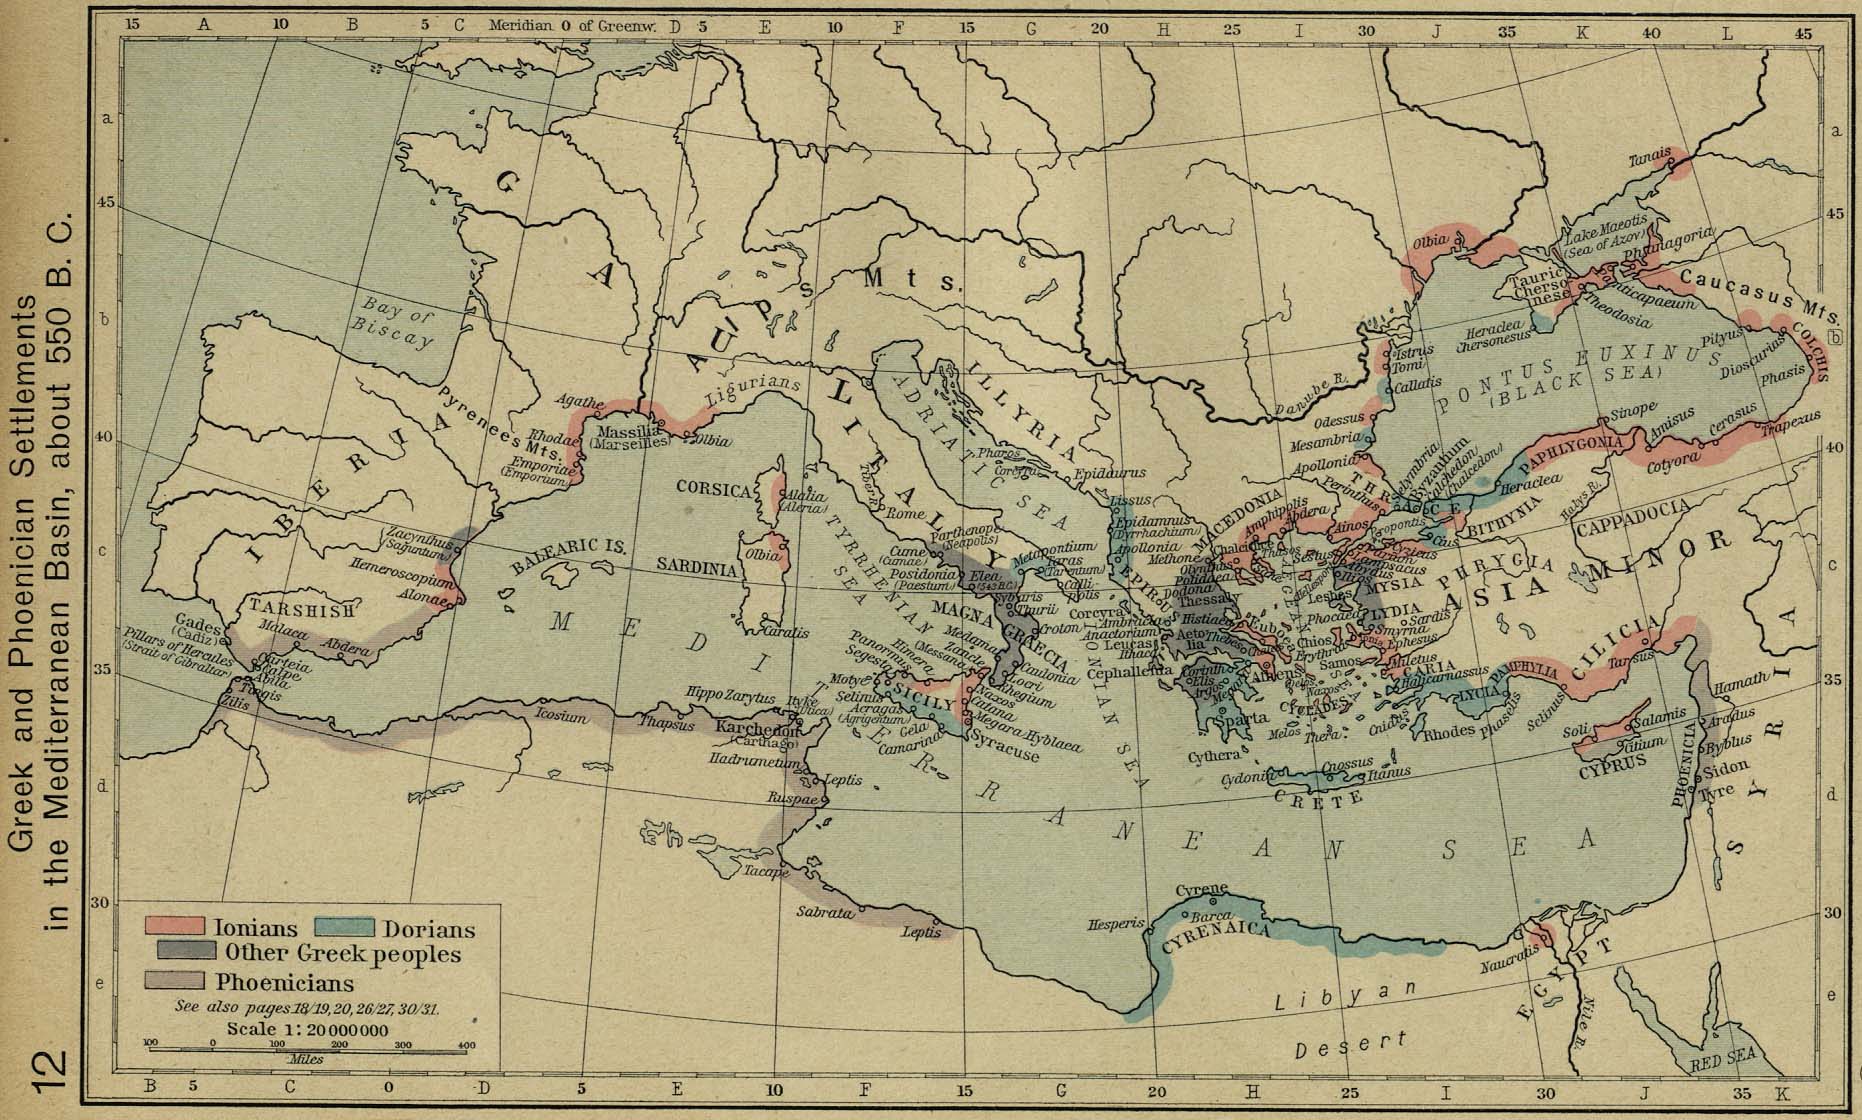 Map of Greek and Phoenician Mediterranean Settlememtsc. 550 BC